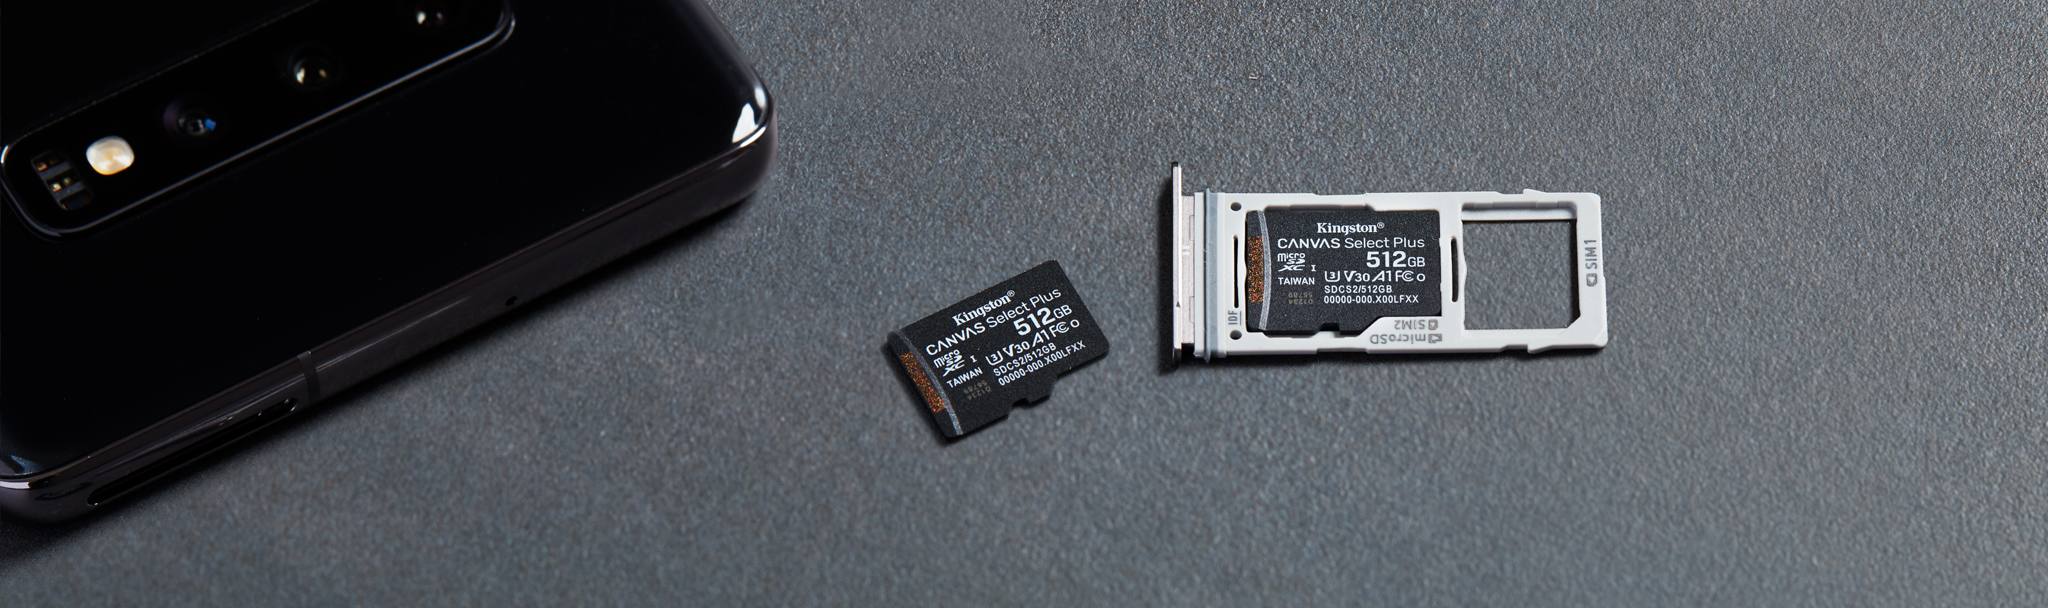 100MBs Works with Kingston Kingston 64GB Viewsonic Viewbok 730 MicroSDXC Canvas Select Plus Card Verified by SanFlash. 